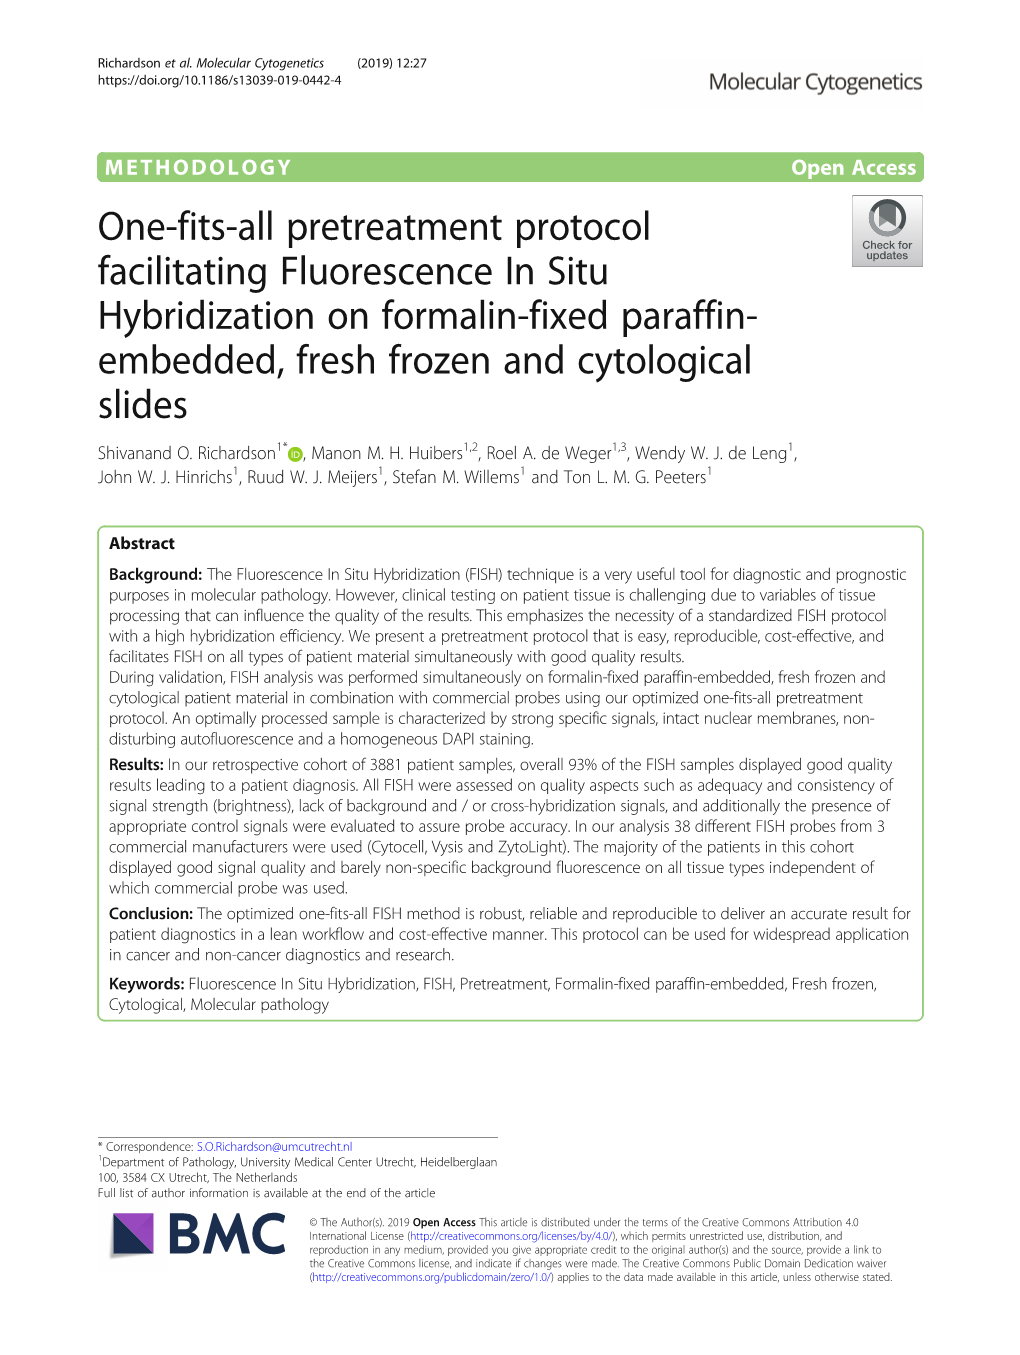 One-Fits-All Pretreatment Protocol Facilitating Fluorescence in Situ